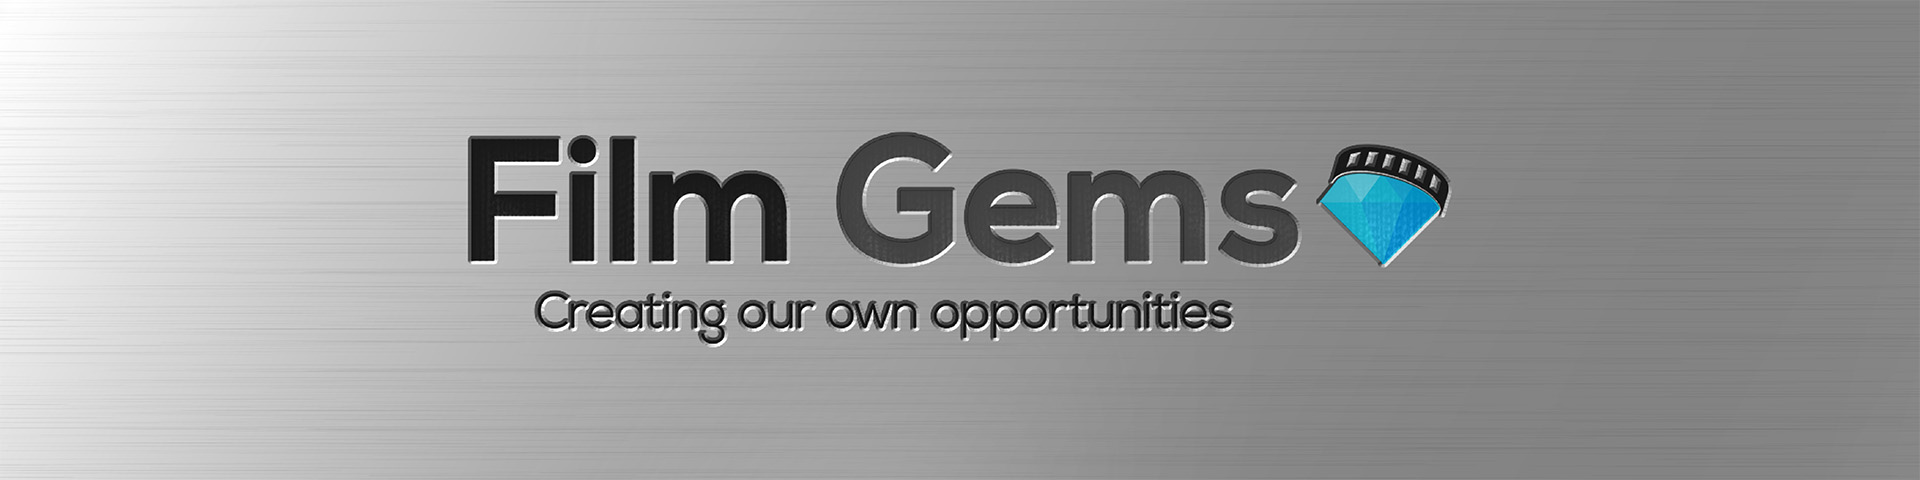 Film Gems Logo-05_1920x480